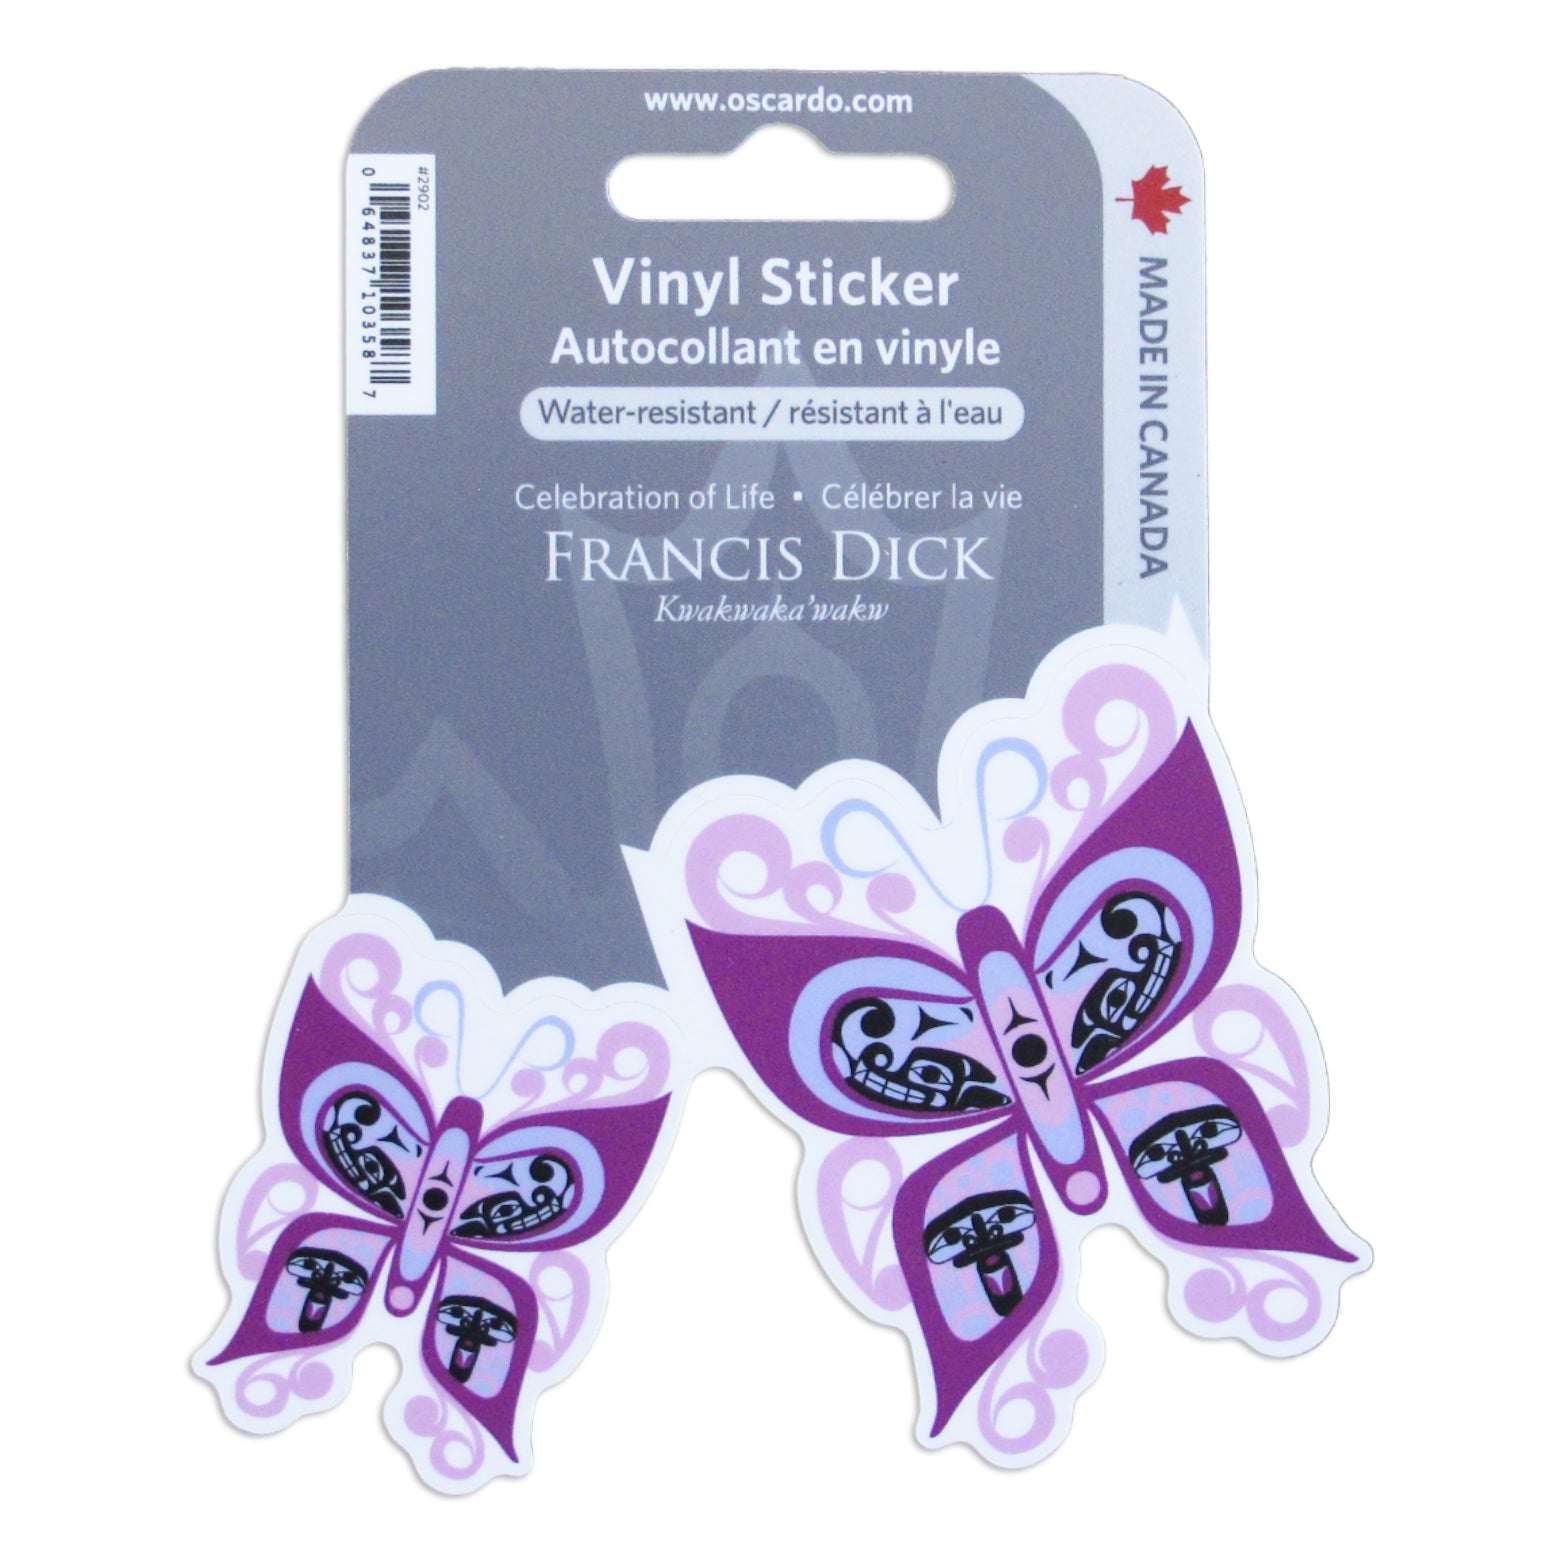 Francis Dick Celebration of Life Vinyl Sticker